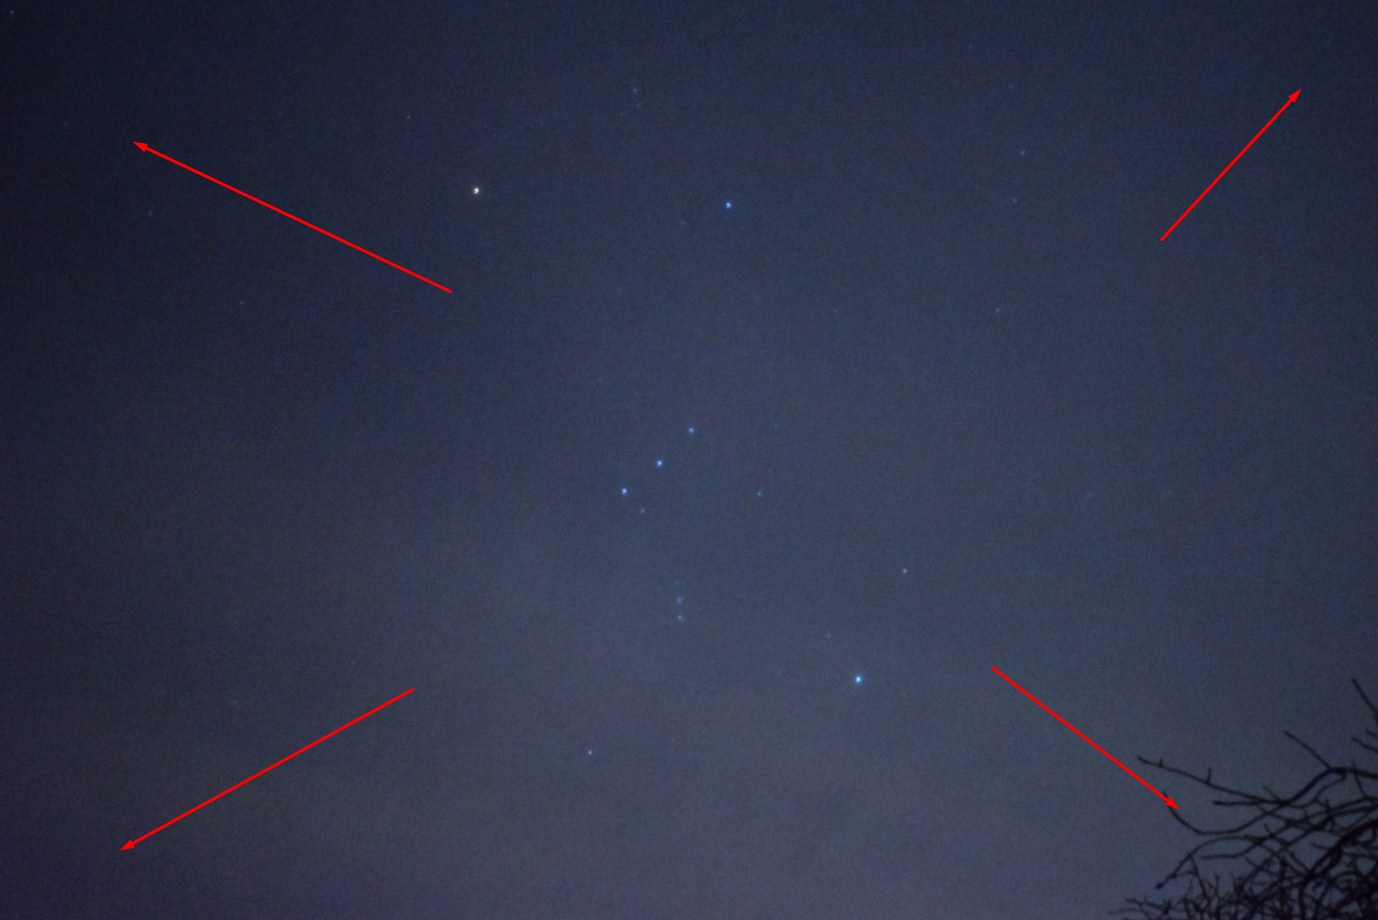 Sigma 18-35mm f/1.8 Art light fall Orion constellation